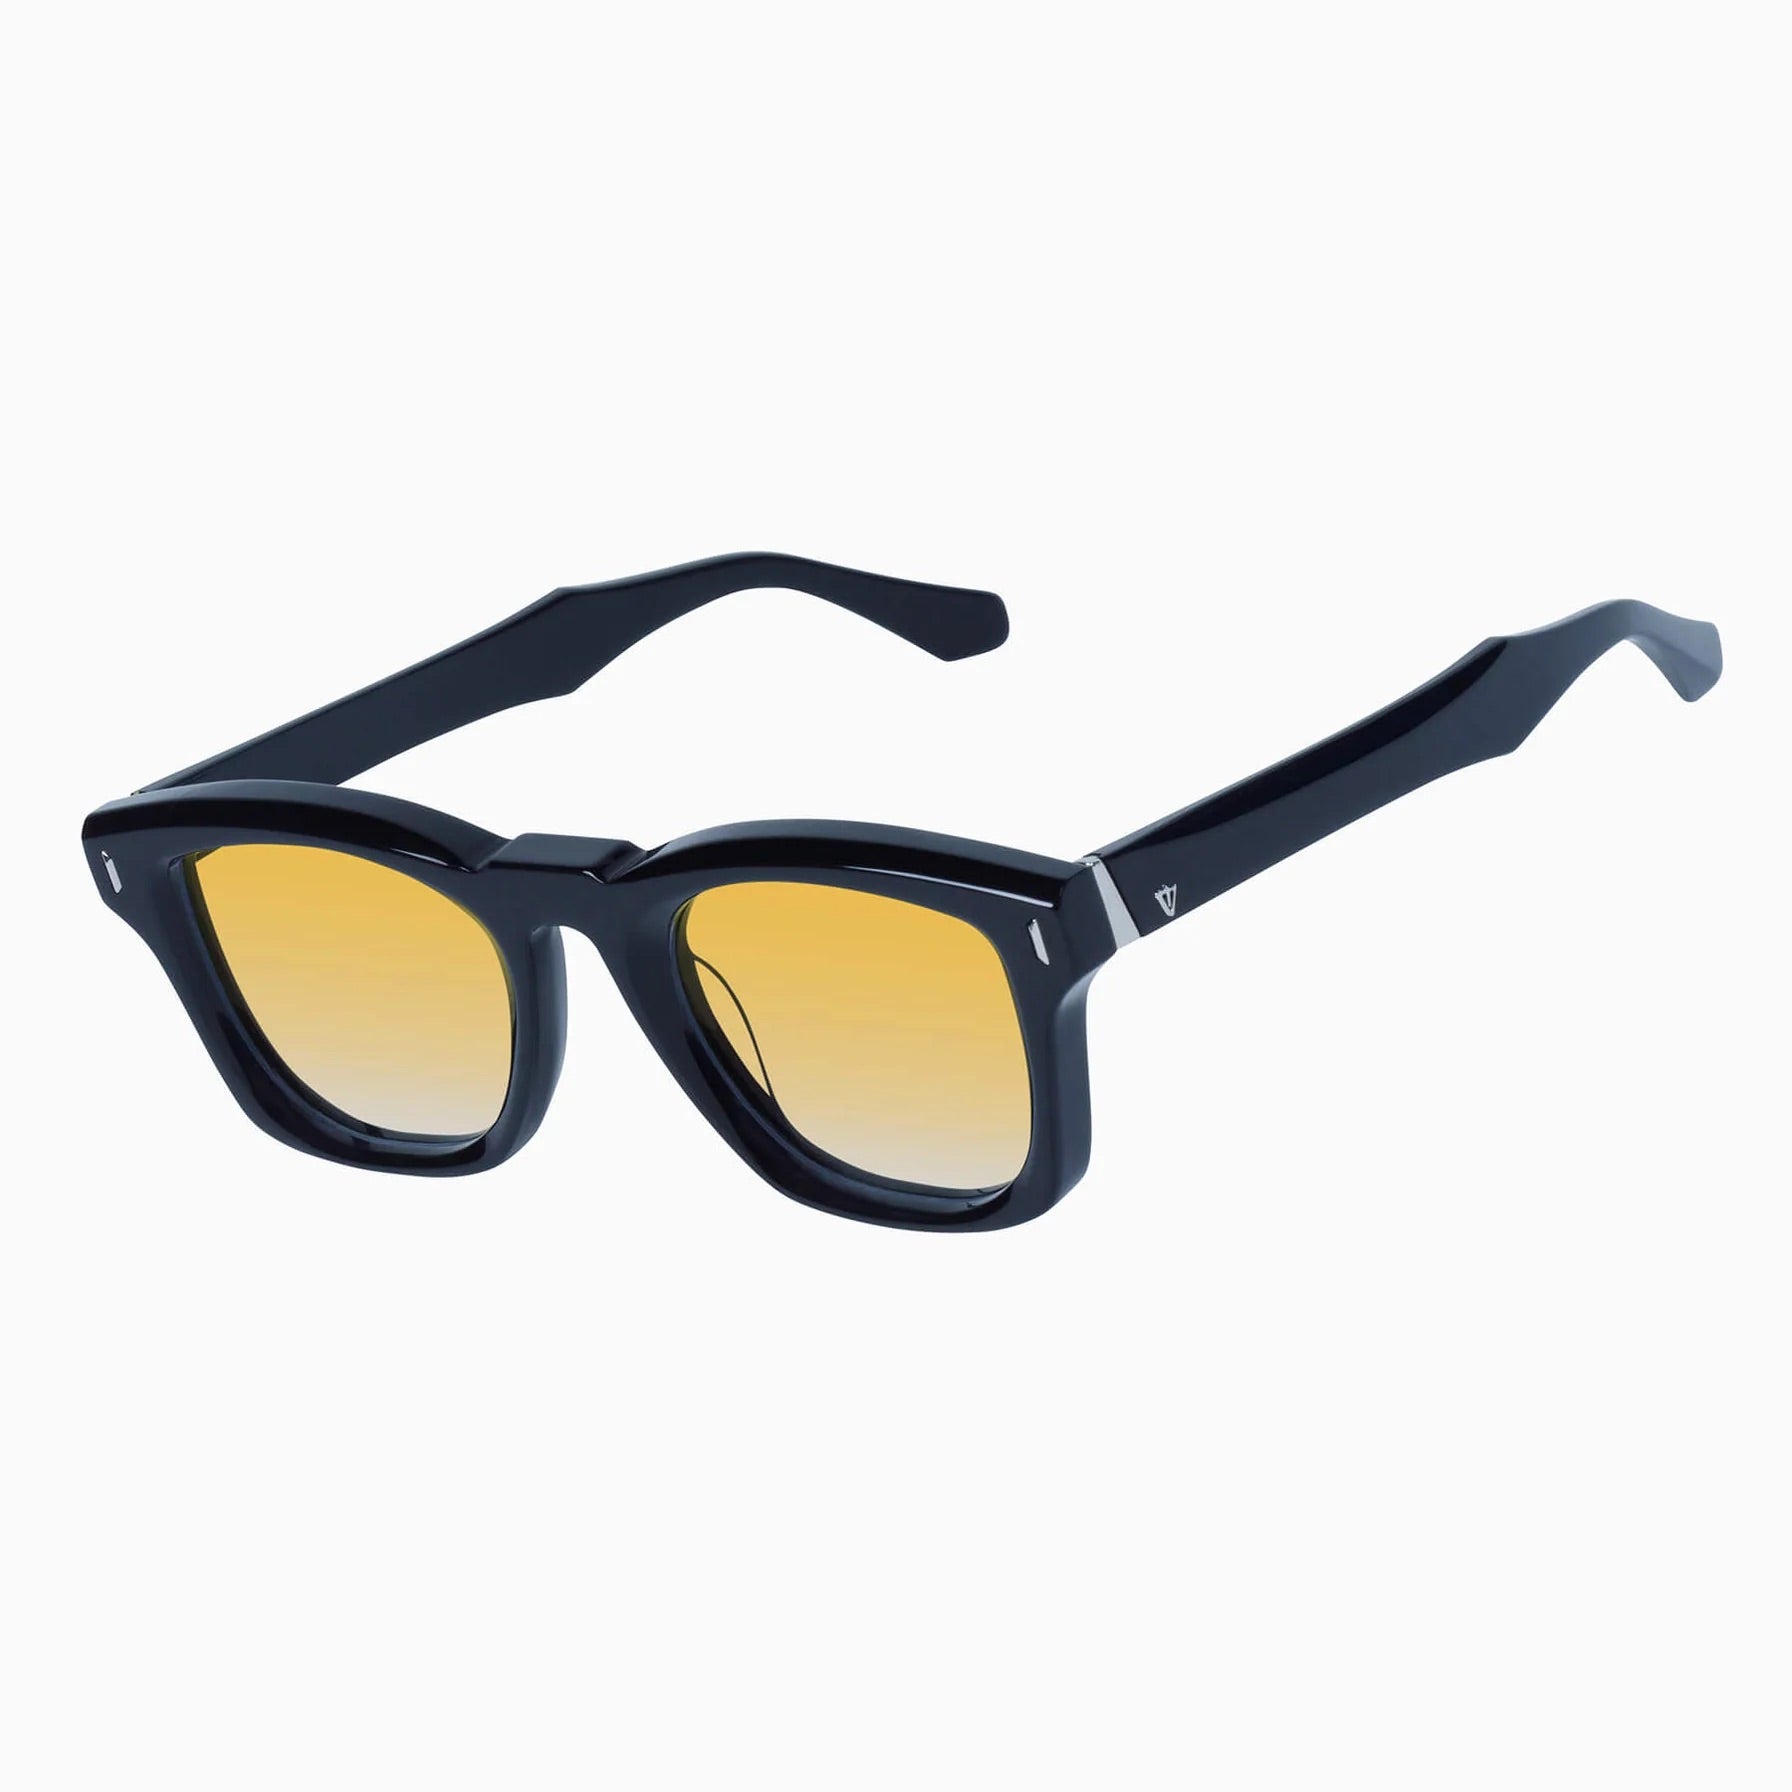 Solomon | Sunglasses - Gloss Black w. Silver Metal Trim / Orange Gradient Lens